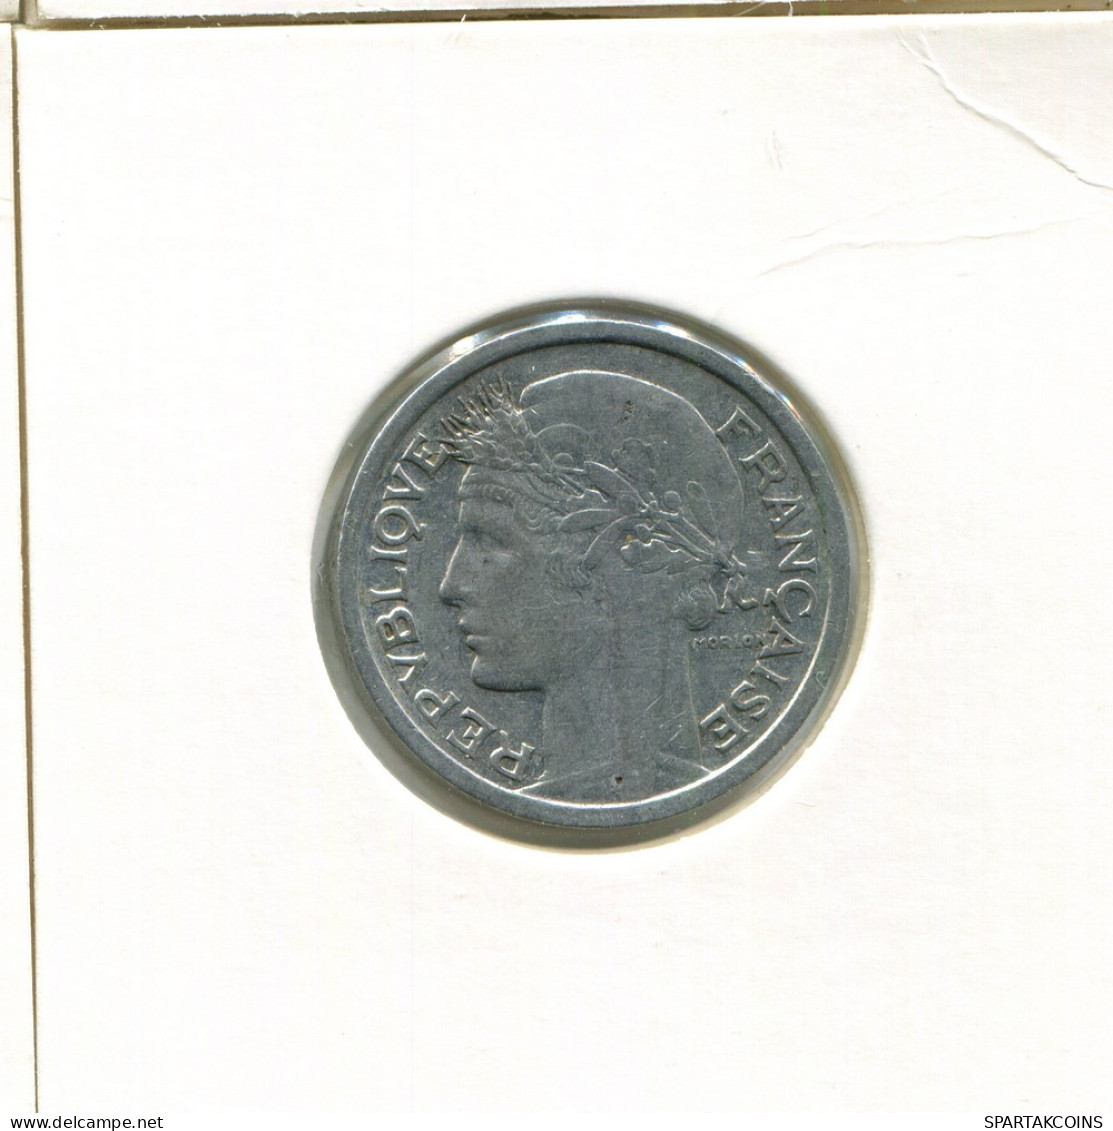 1 FRANC 1957 FRANKREICH FRANCE Französisch Münze #AK602.D - 1 Franc